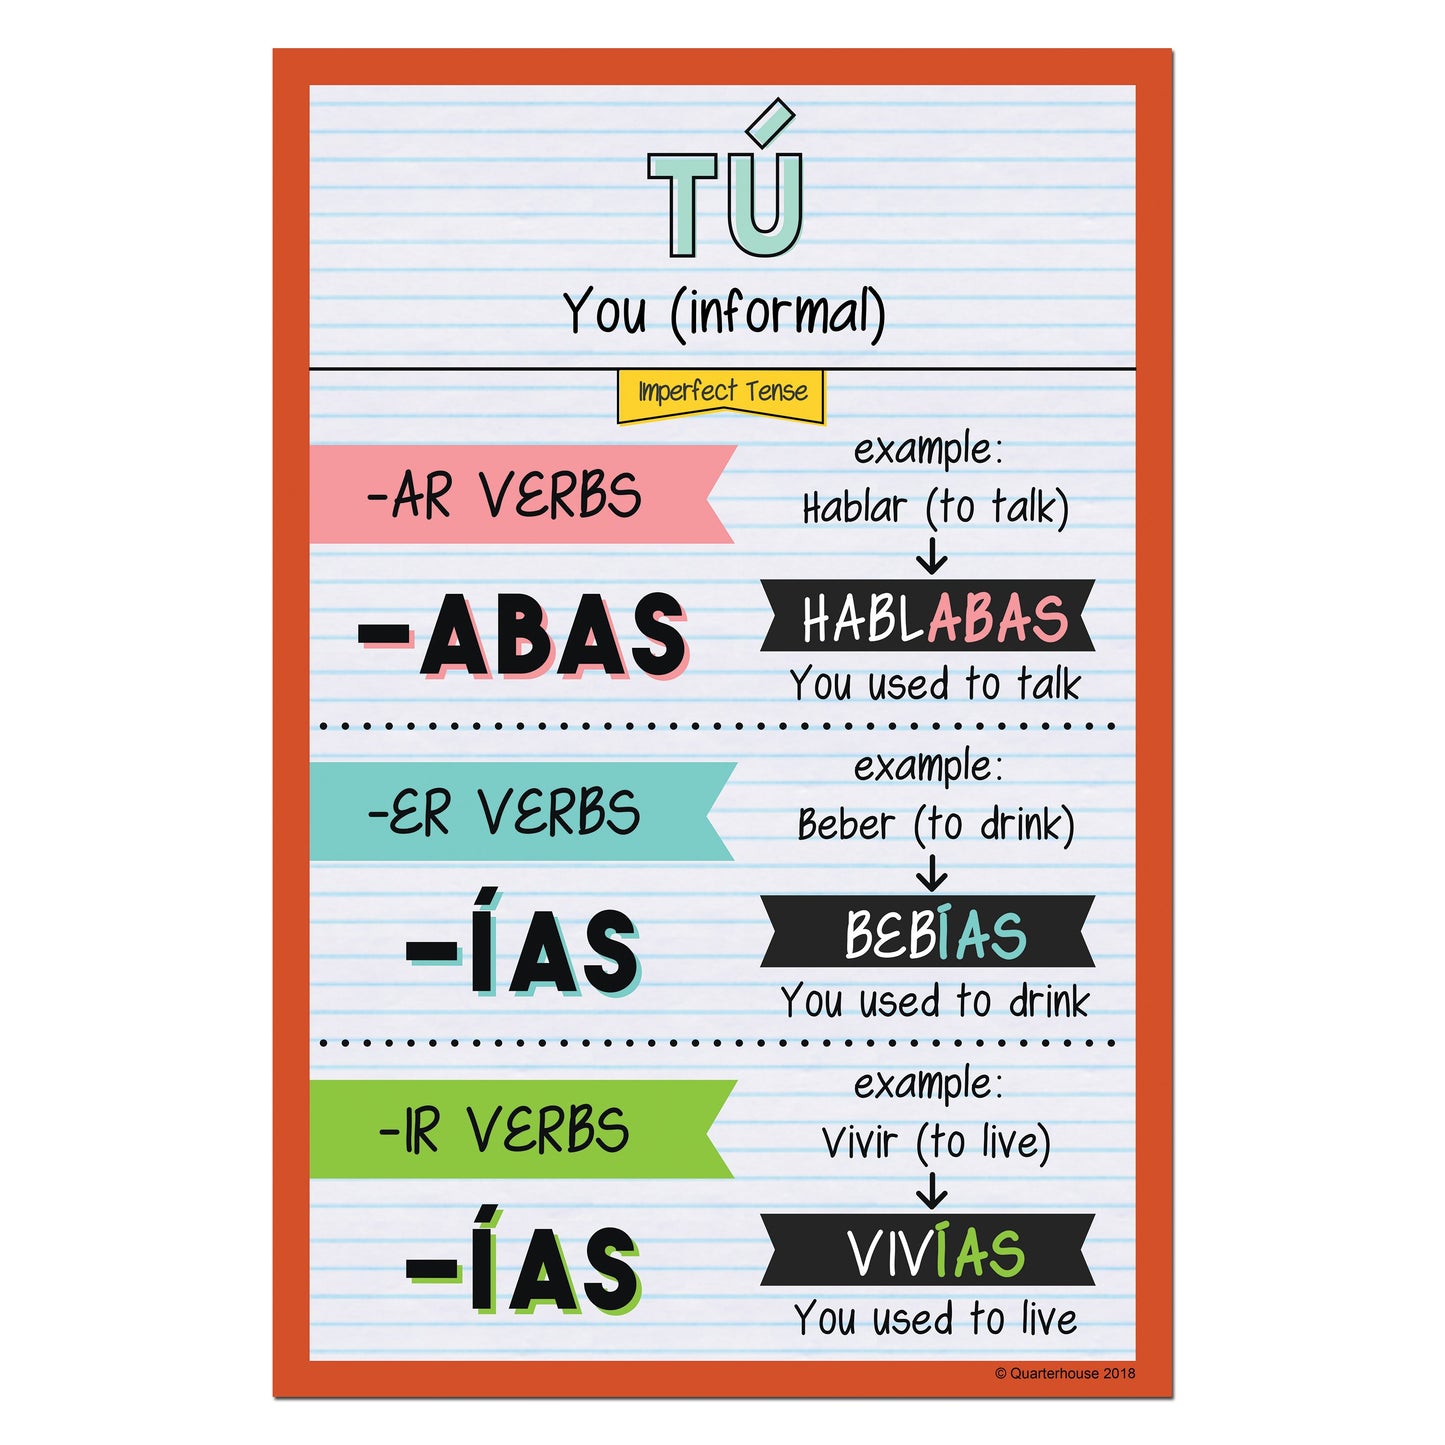 Quarterhouse Tú - Imperfect Tense Spanish Verb Conjugation Poster, Spanish and ESL Classroom Materials for Teachers